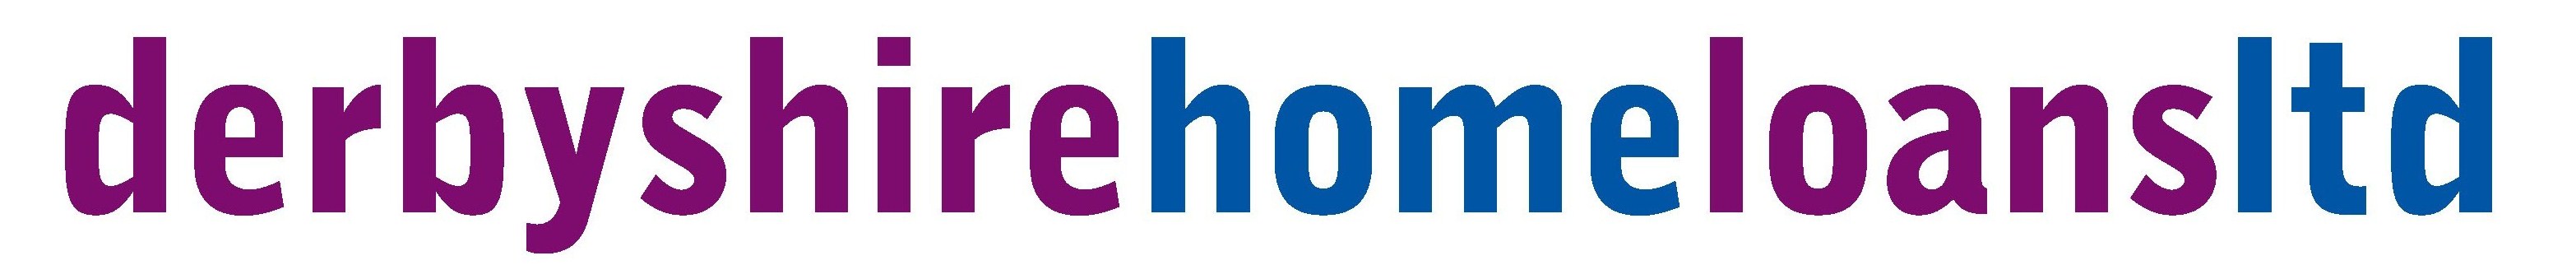 Derbyshire home loans logo